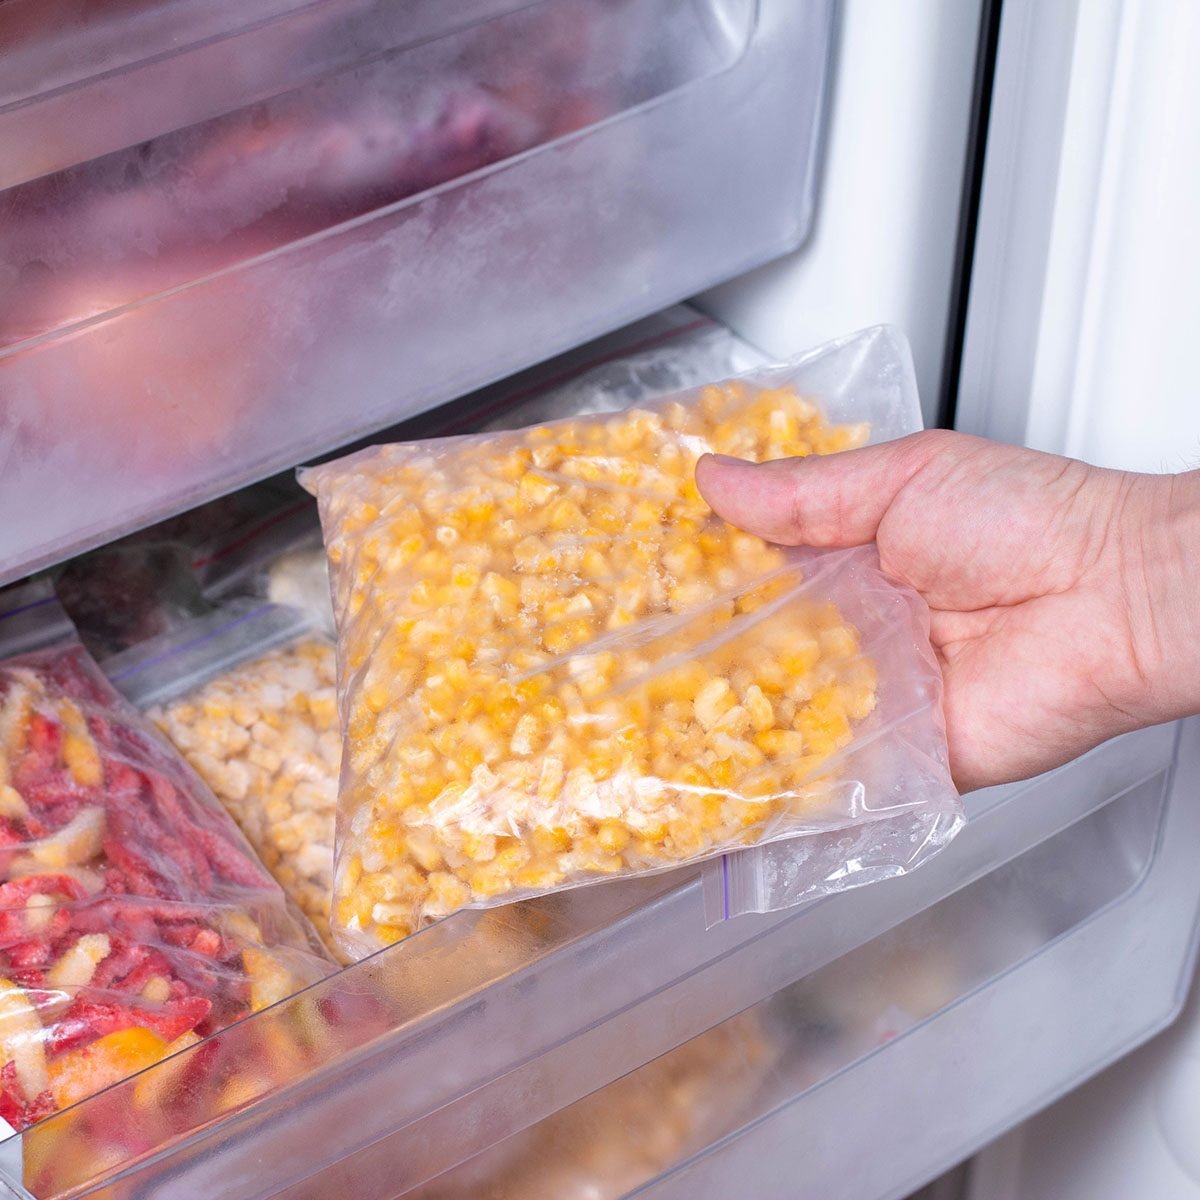 Placing corn in freezer